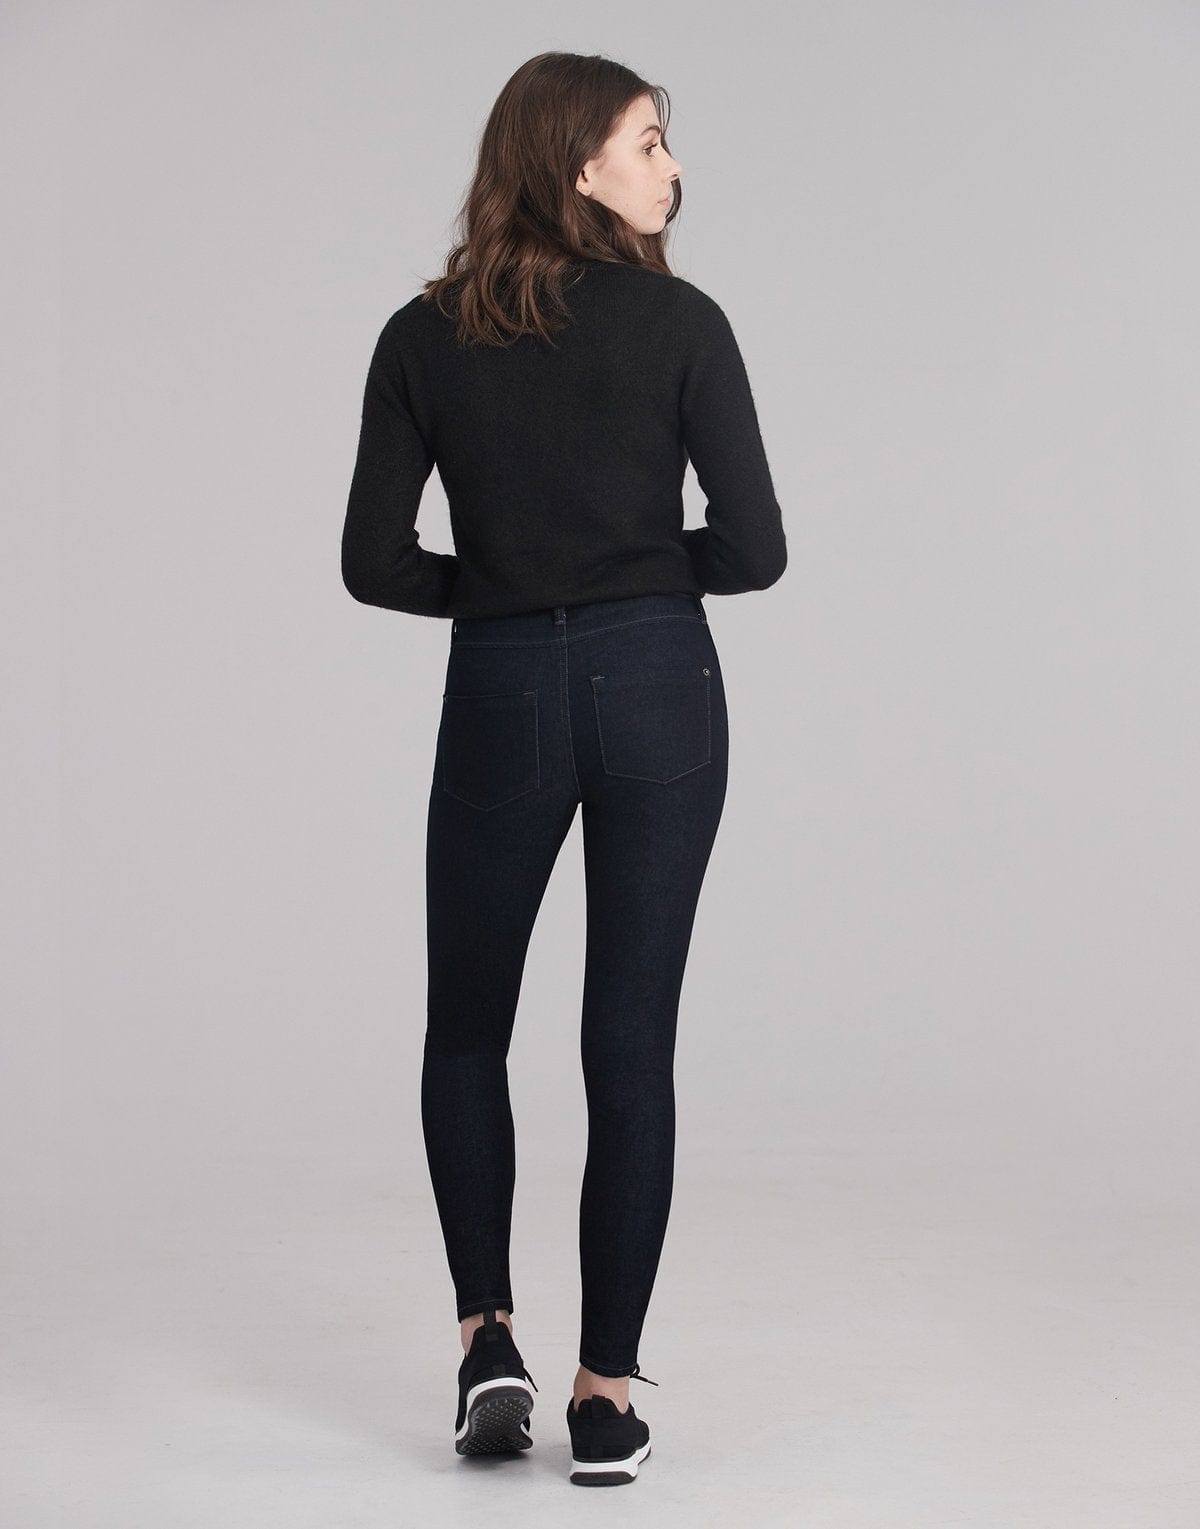 Yoga Jeans Rachel Skinny High-Rise Jeans - Serenity